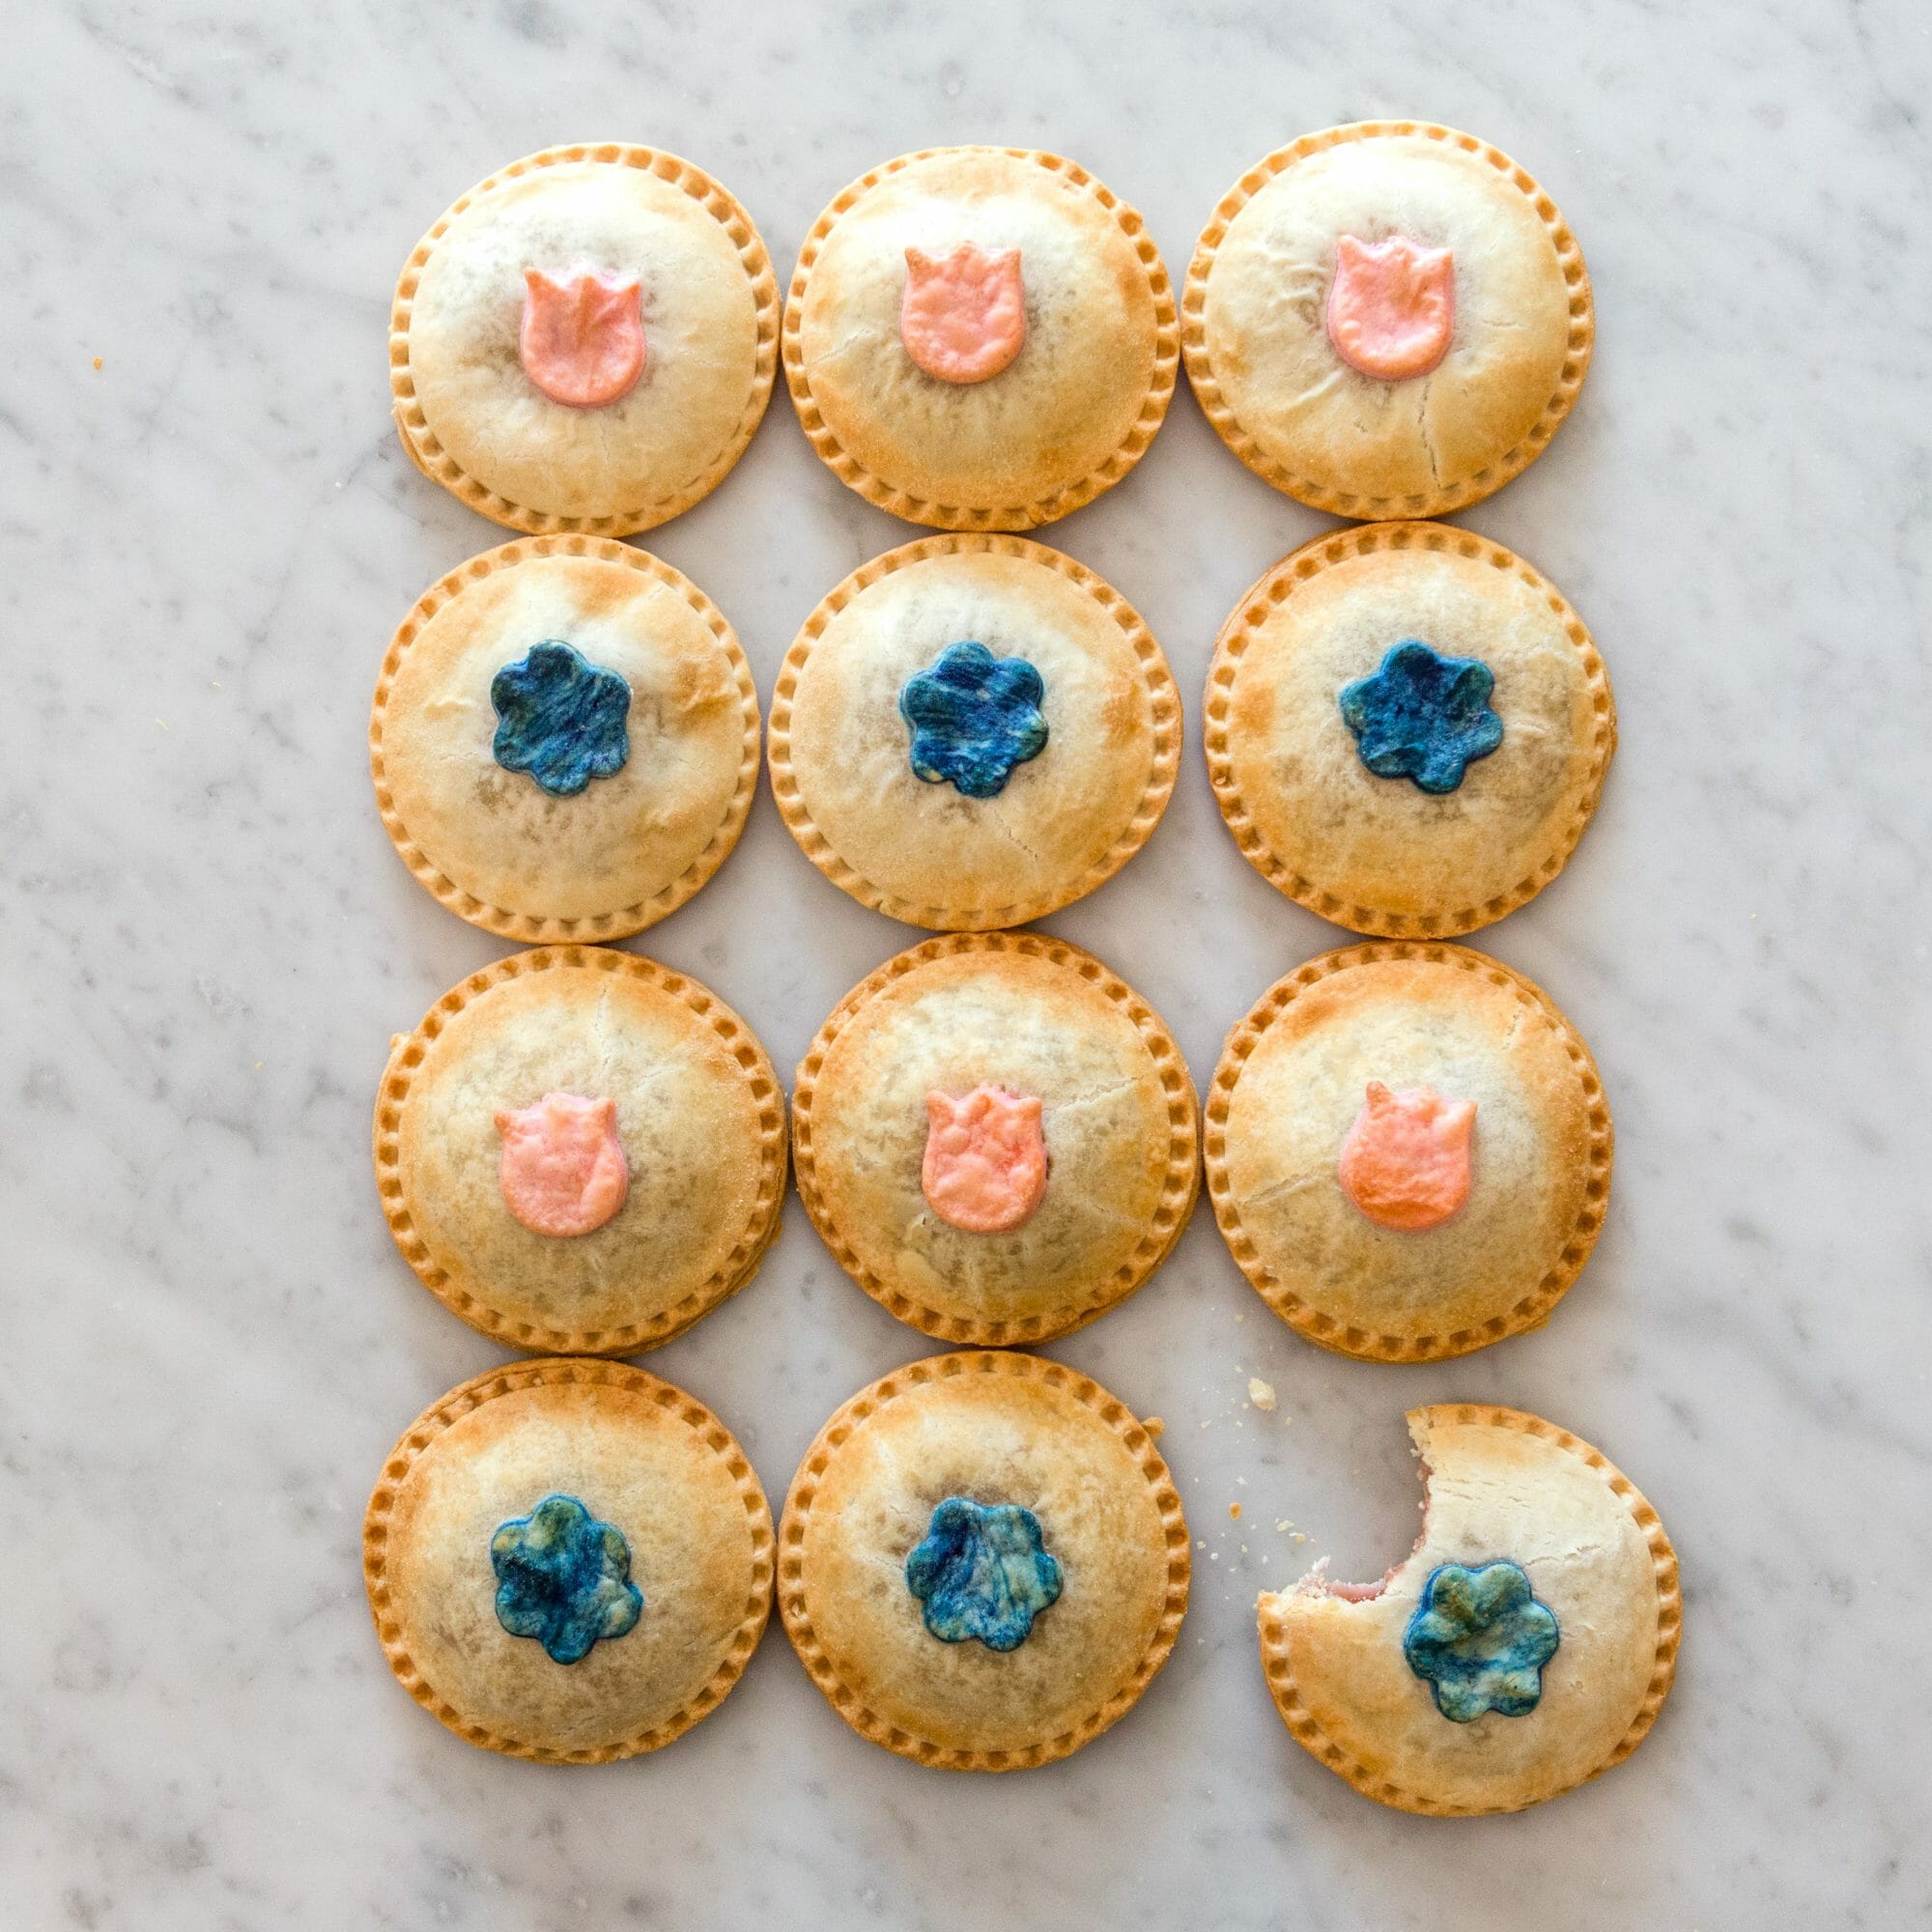 Flower Market || JennyCookies.com #flowers #flowerdesserts #desserts #cookies #cupcakes #jennycookies